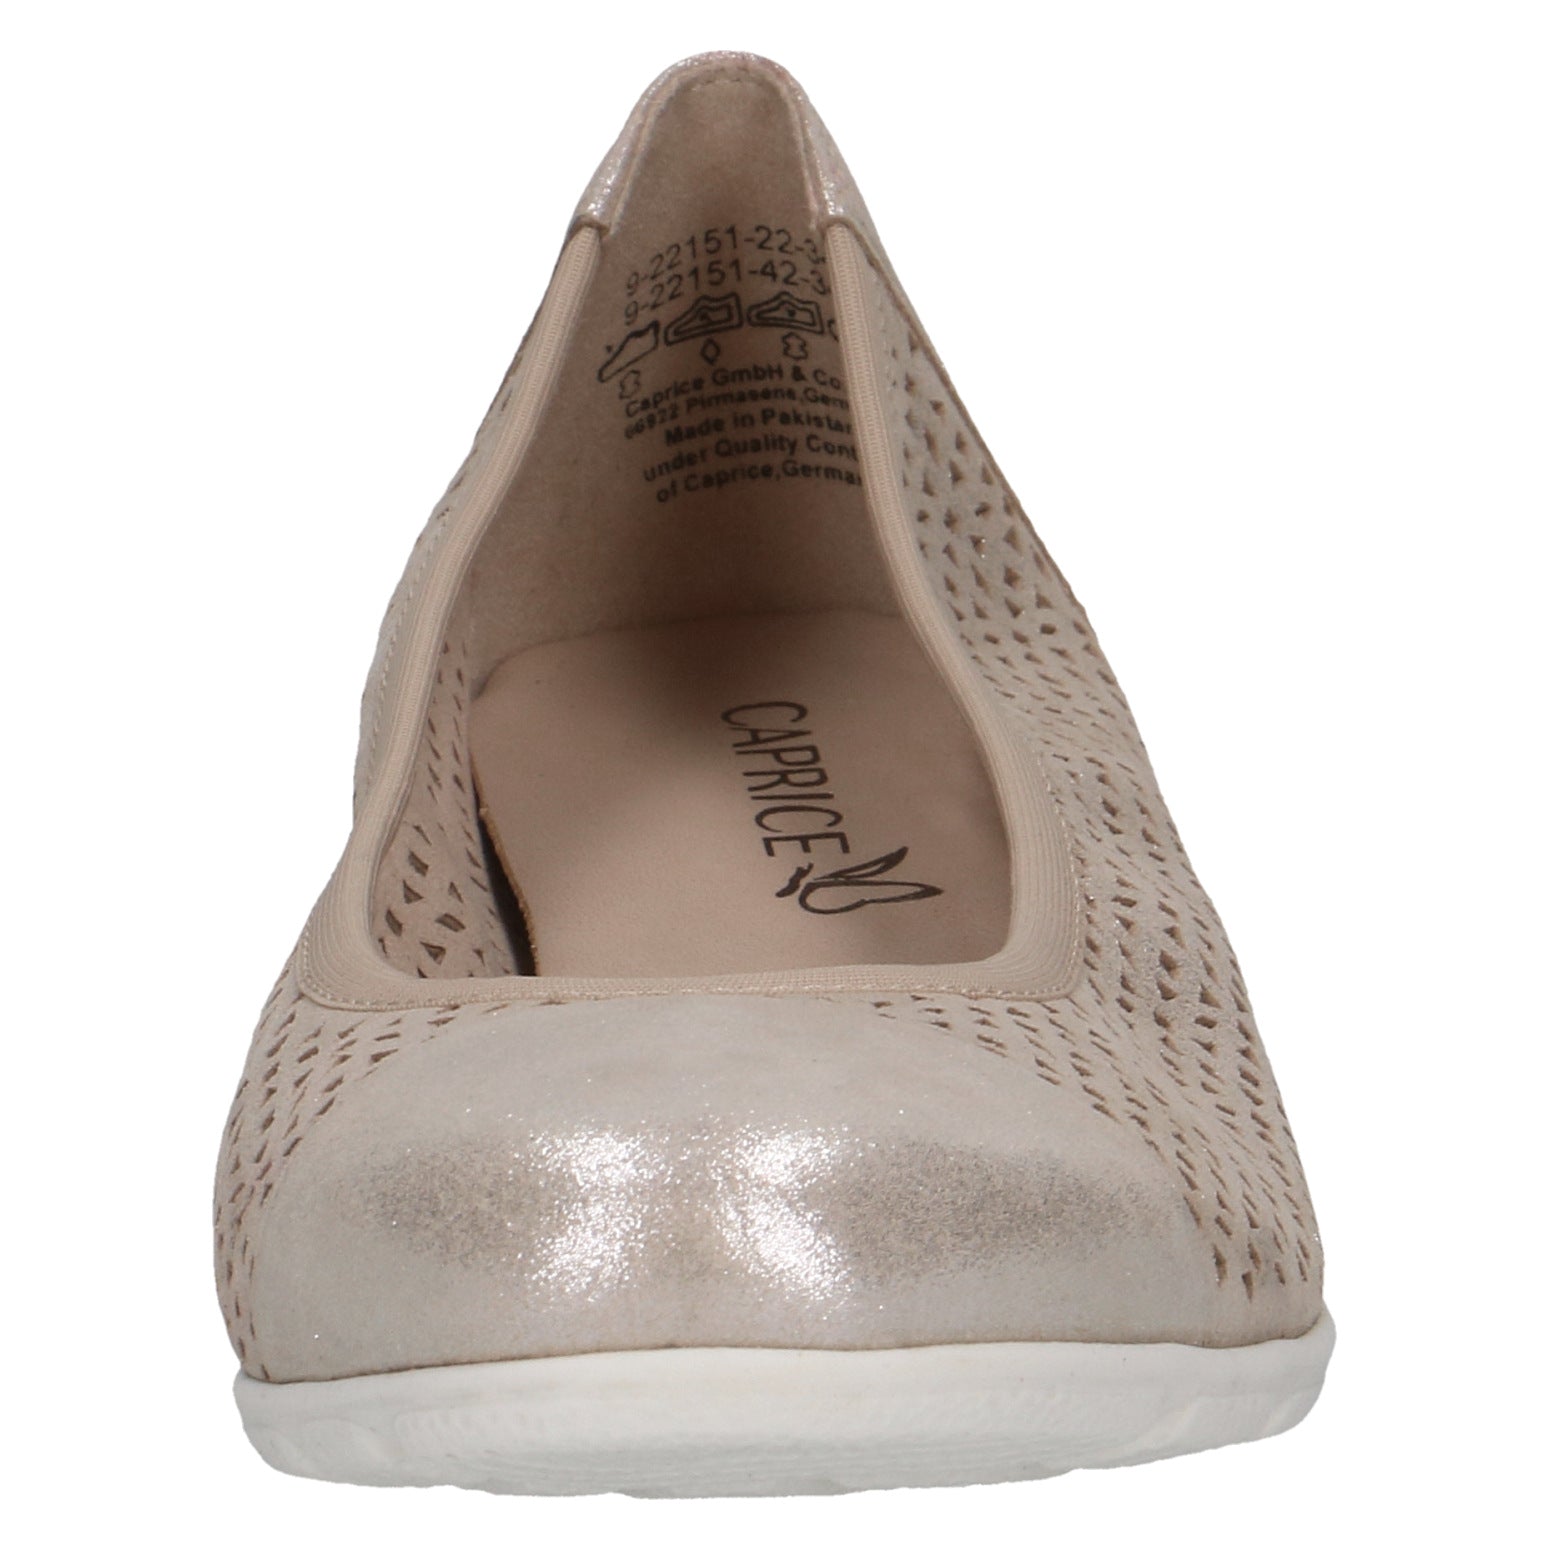 Caprice 9-22151-42 341 Ladies Taupe Metallic Leather Slip On Shoes